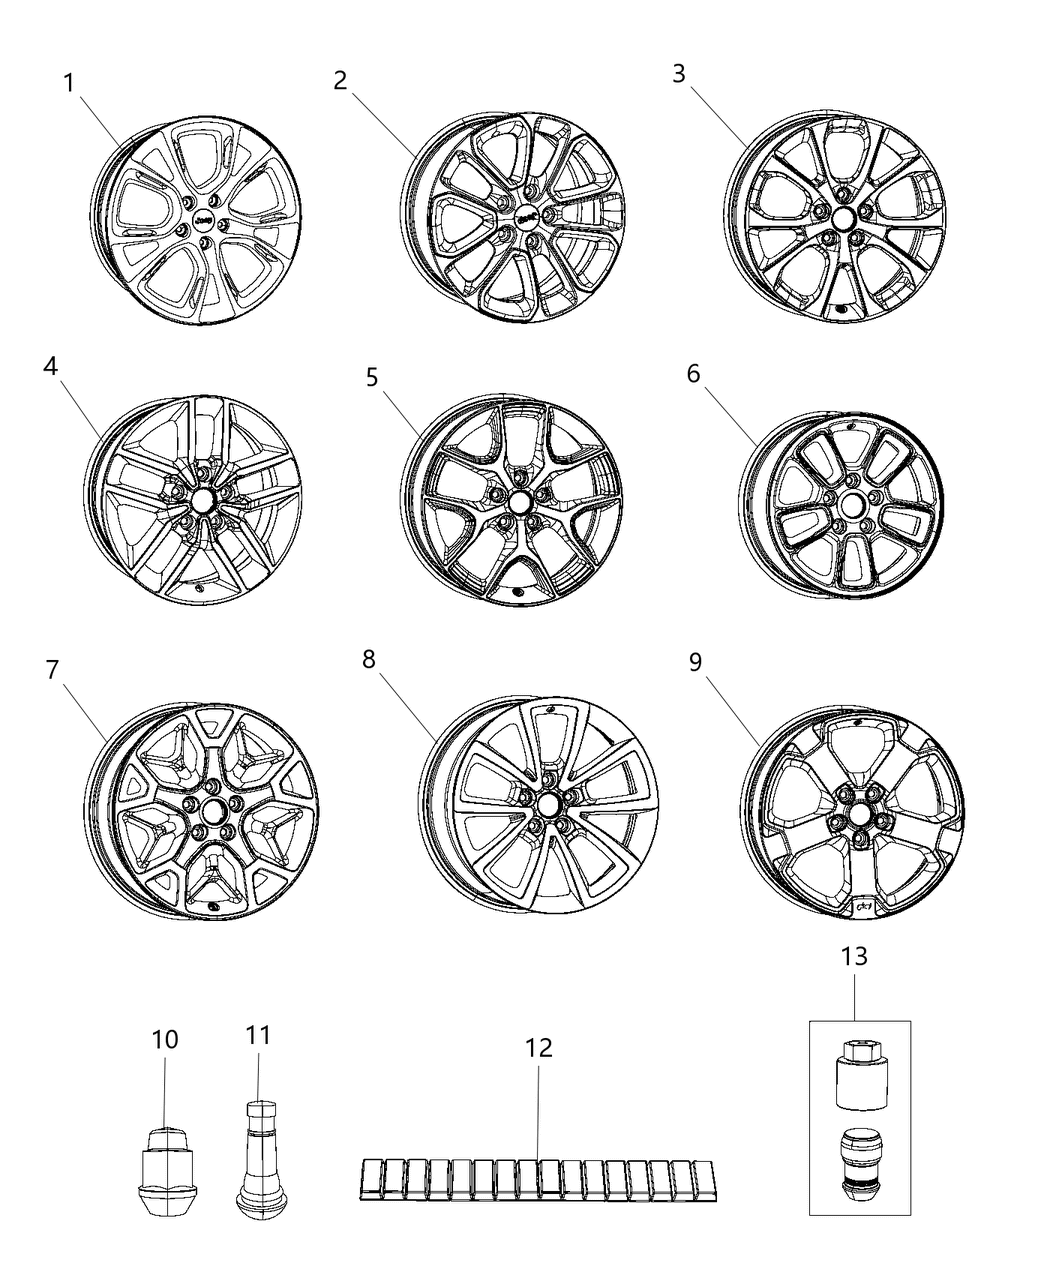 Mopar 6VC21RXFAA Aluminum Wheel